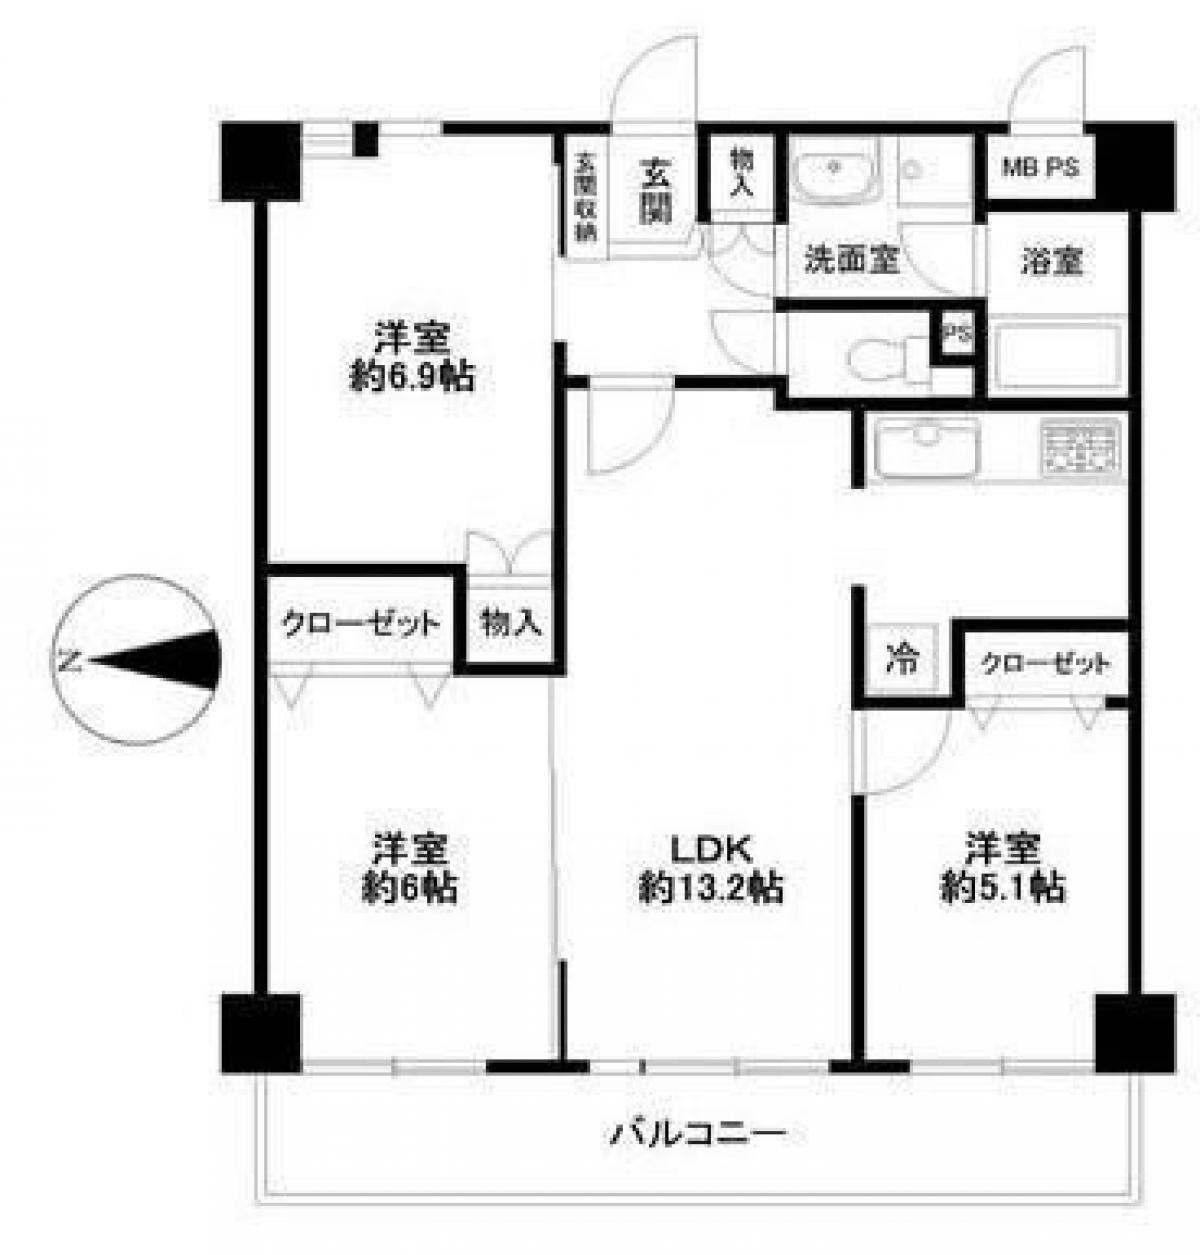 Picture of Apartment For Sale in Saitama Shi Omiya Ku, Saitama, Japan